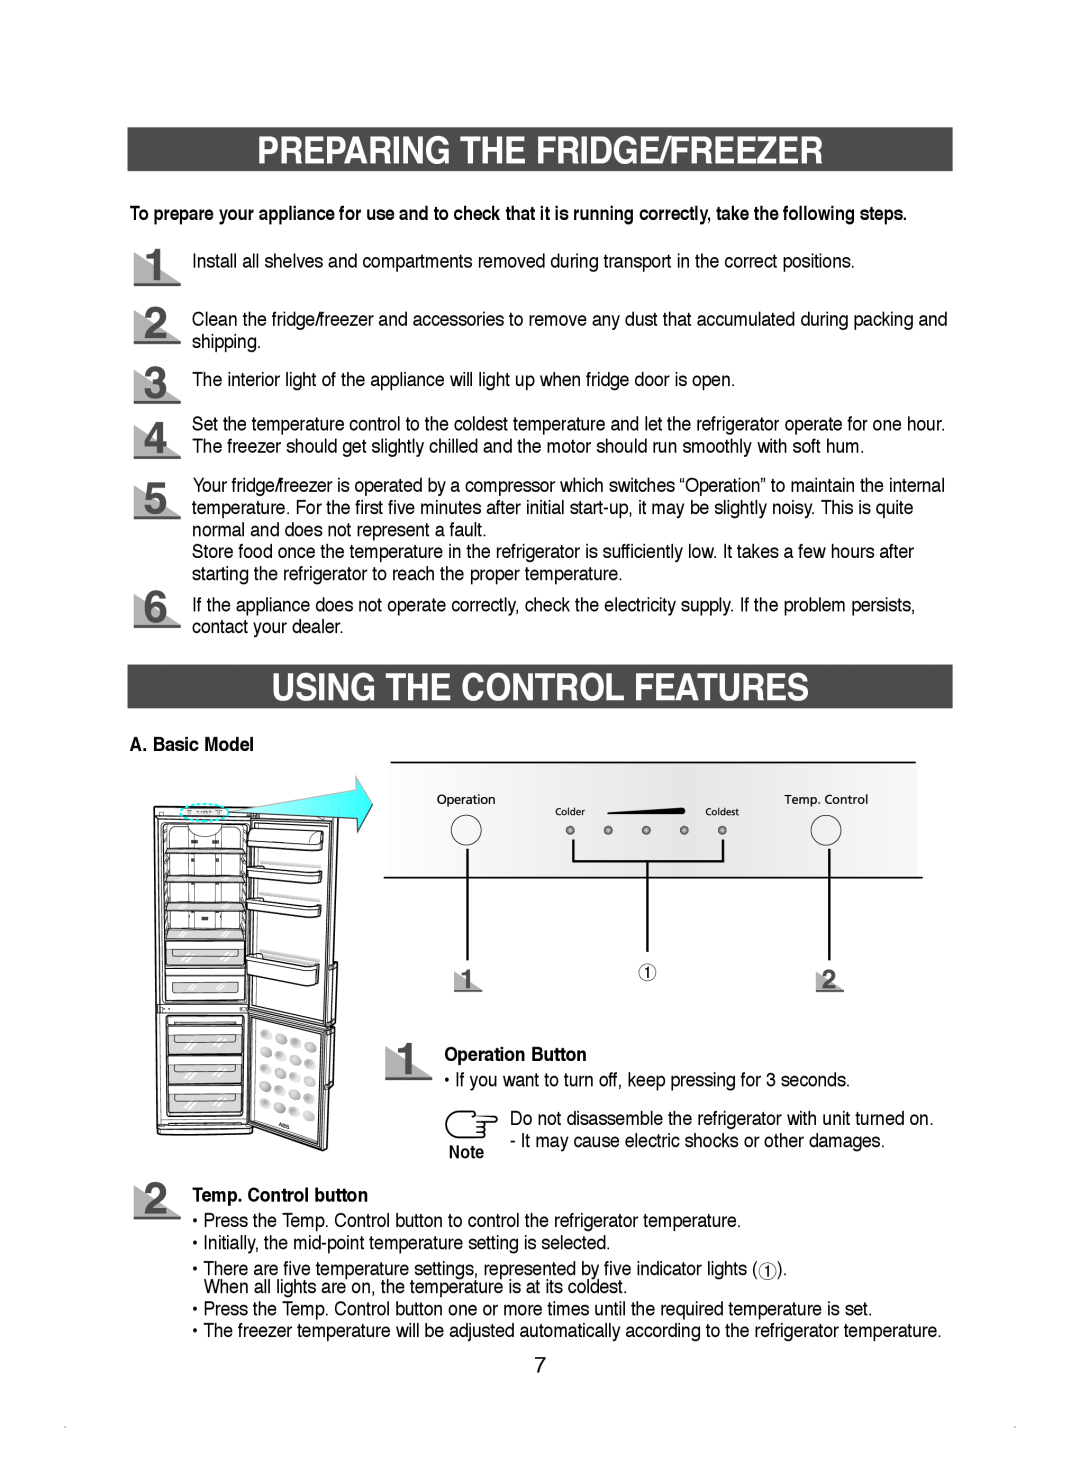 Samsung DA99-01220J manual Preparing The Fridge/Freezer, Using The Control Features, A. Basic Model, Operation Button 